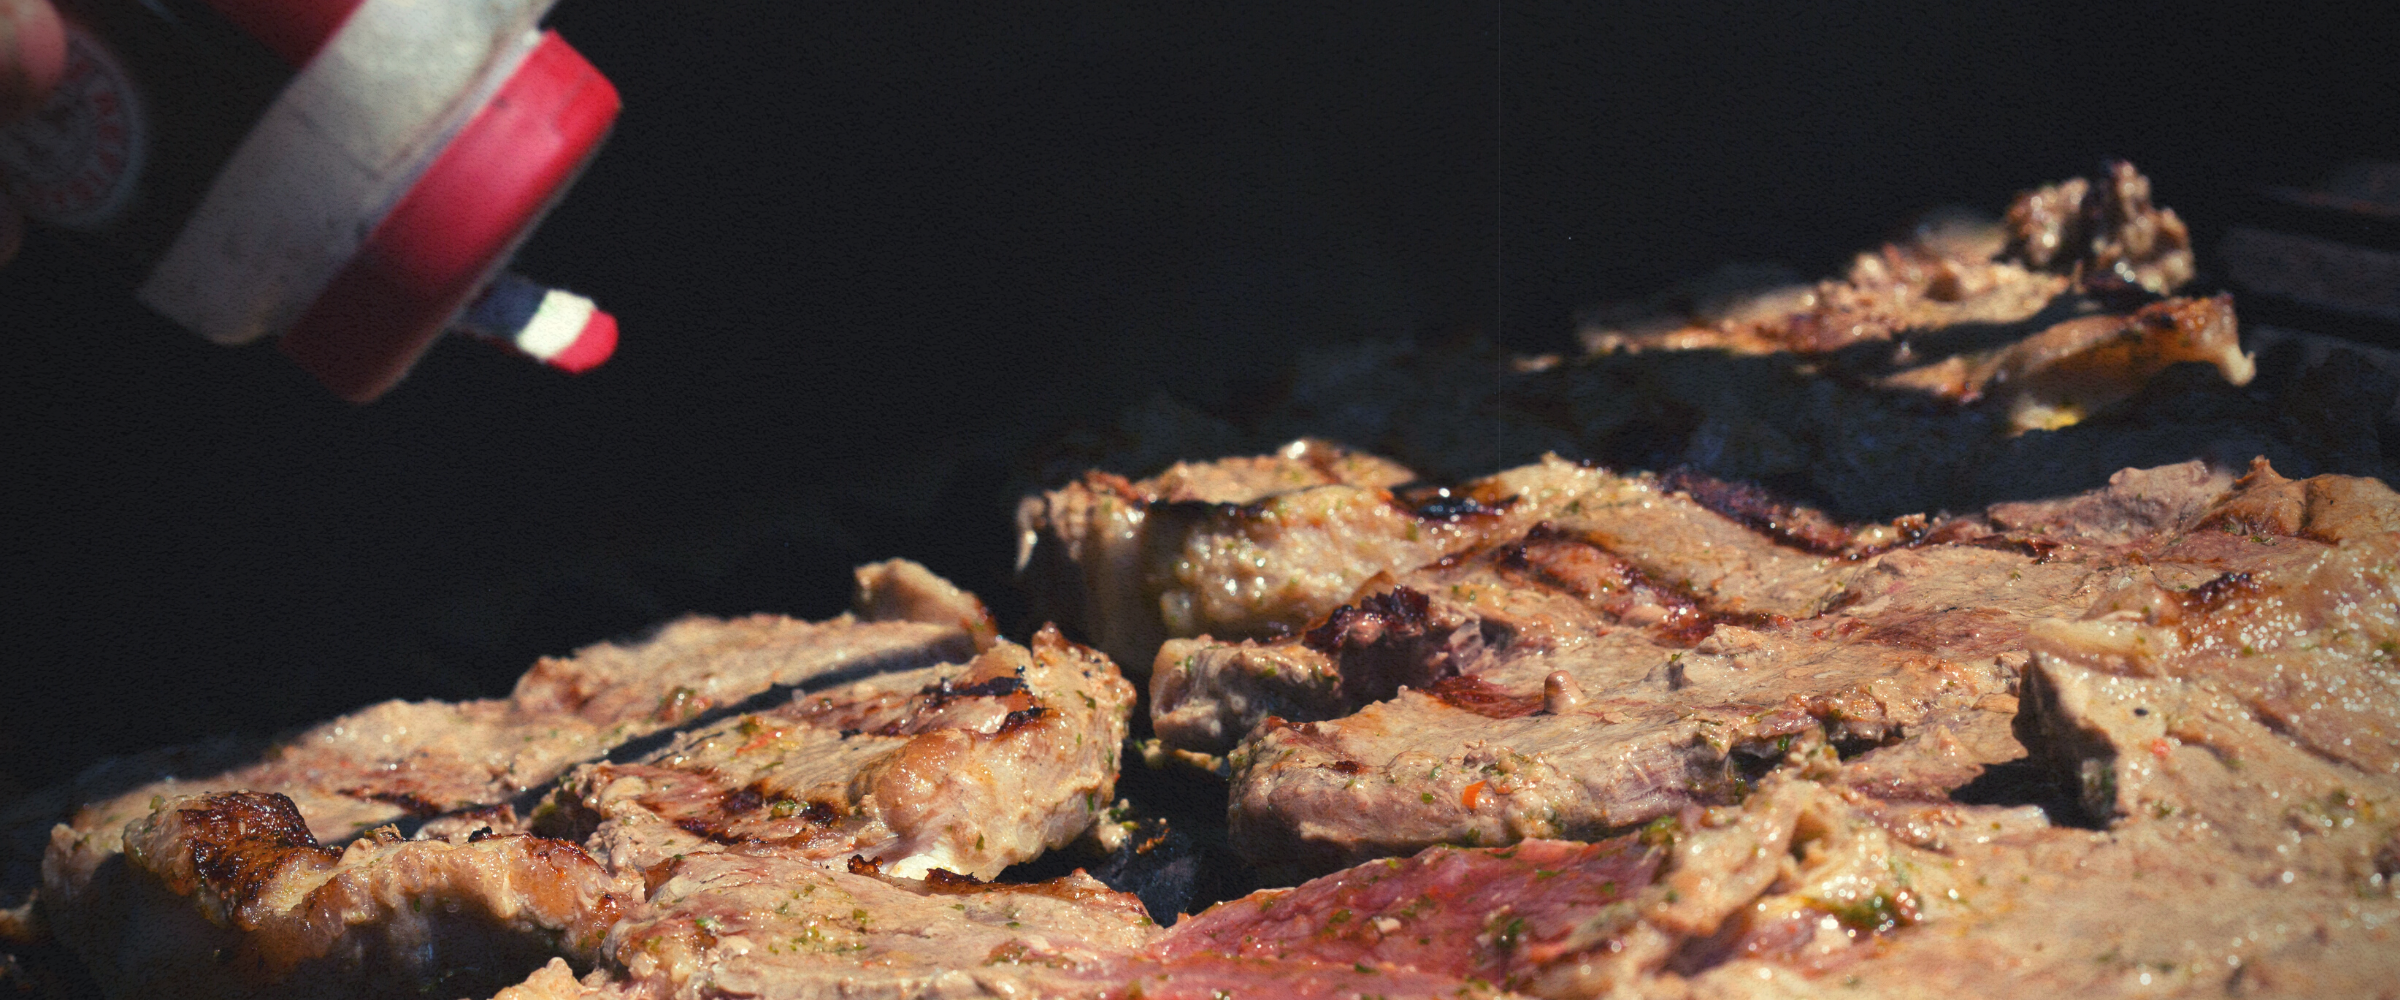 Carne defumada forno vertical em inox